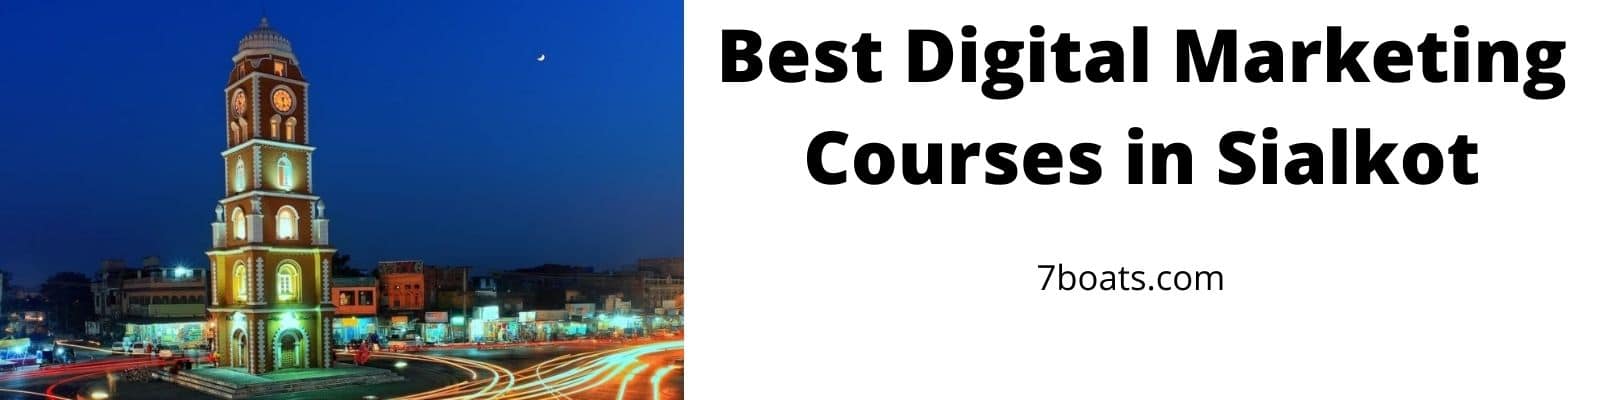 Best Digital Marketing Courses in Sialkot